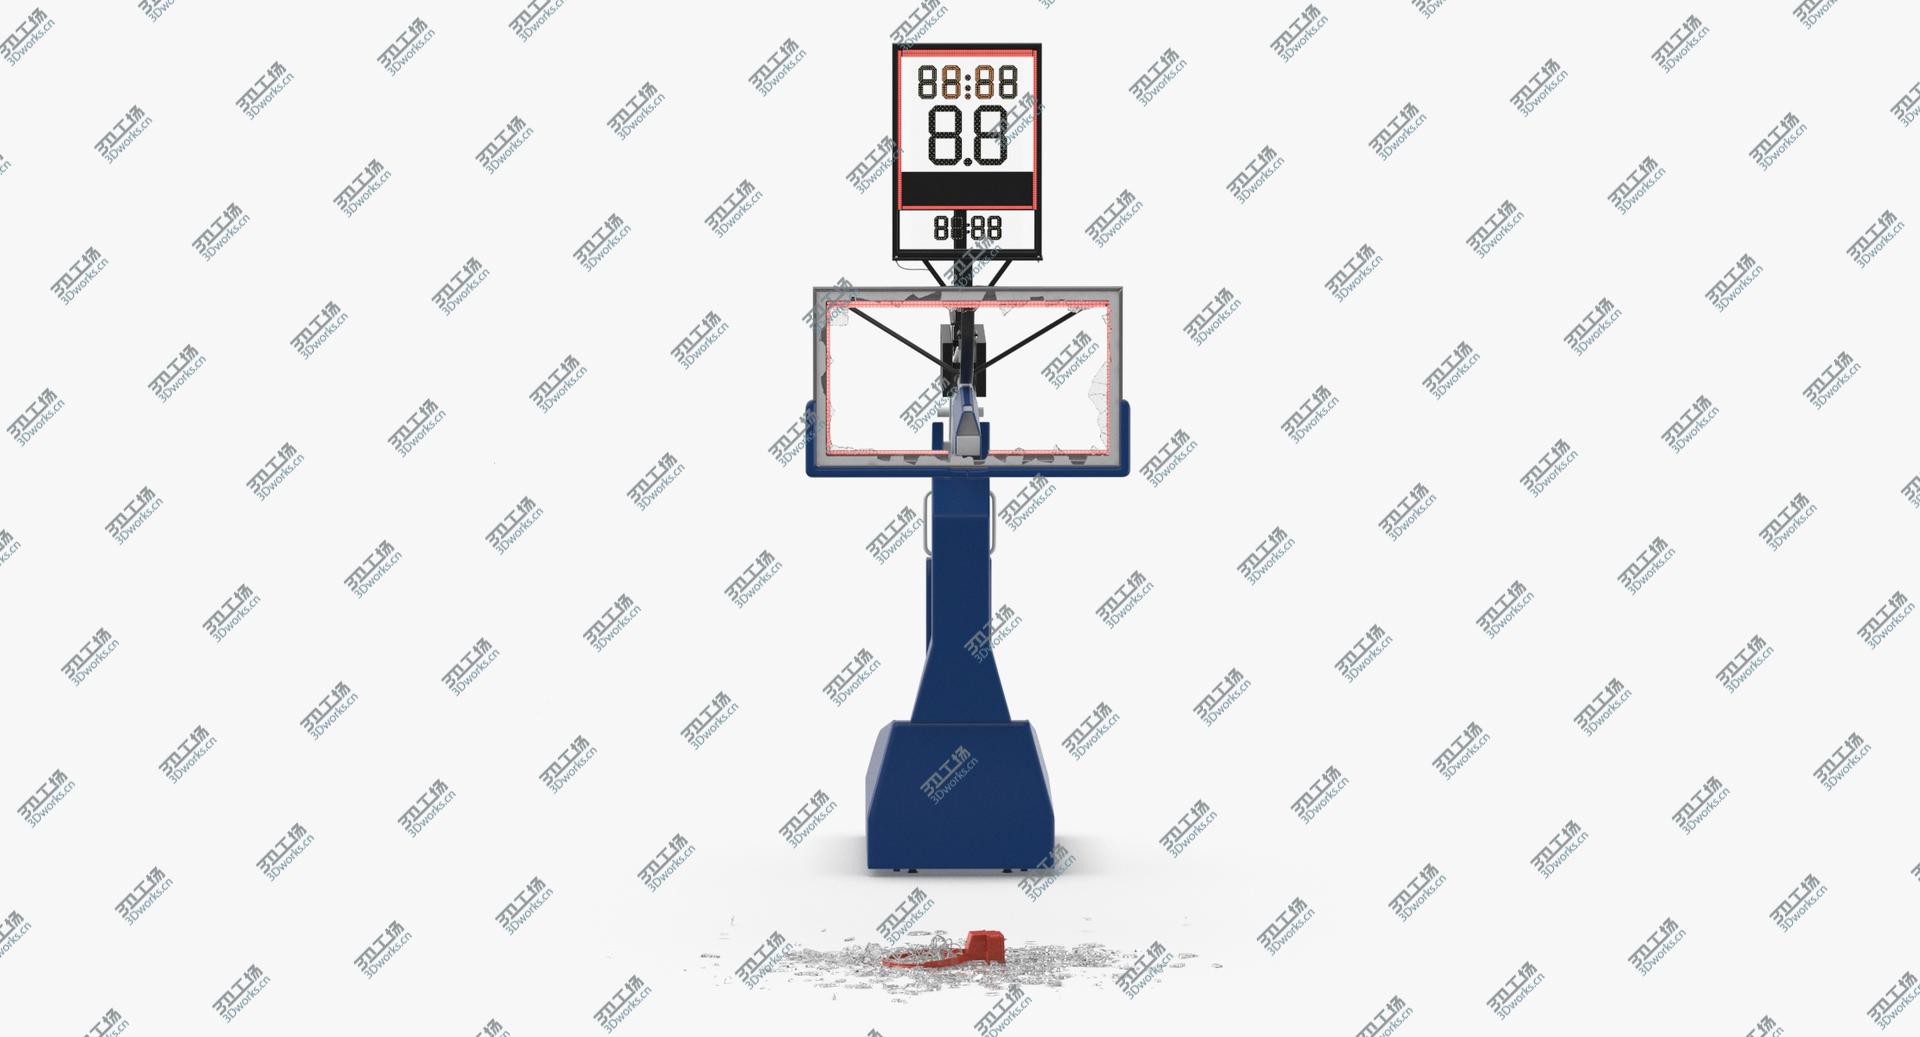 images/goods_img/202104092/3D Basketball Board Breaking Pose 04/4.jpg